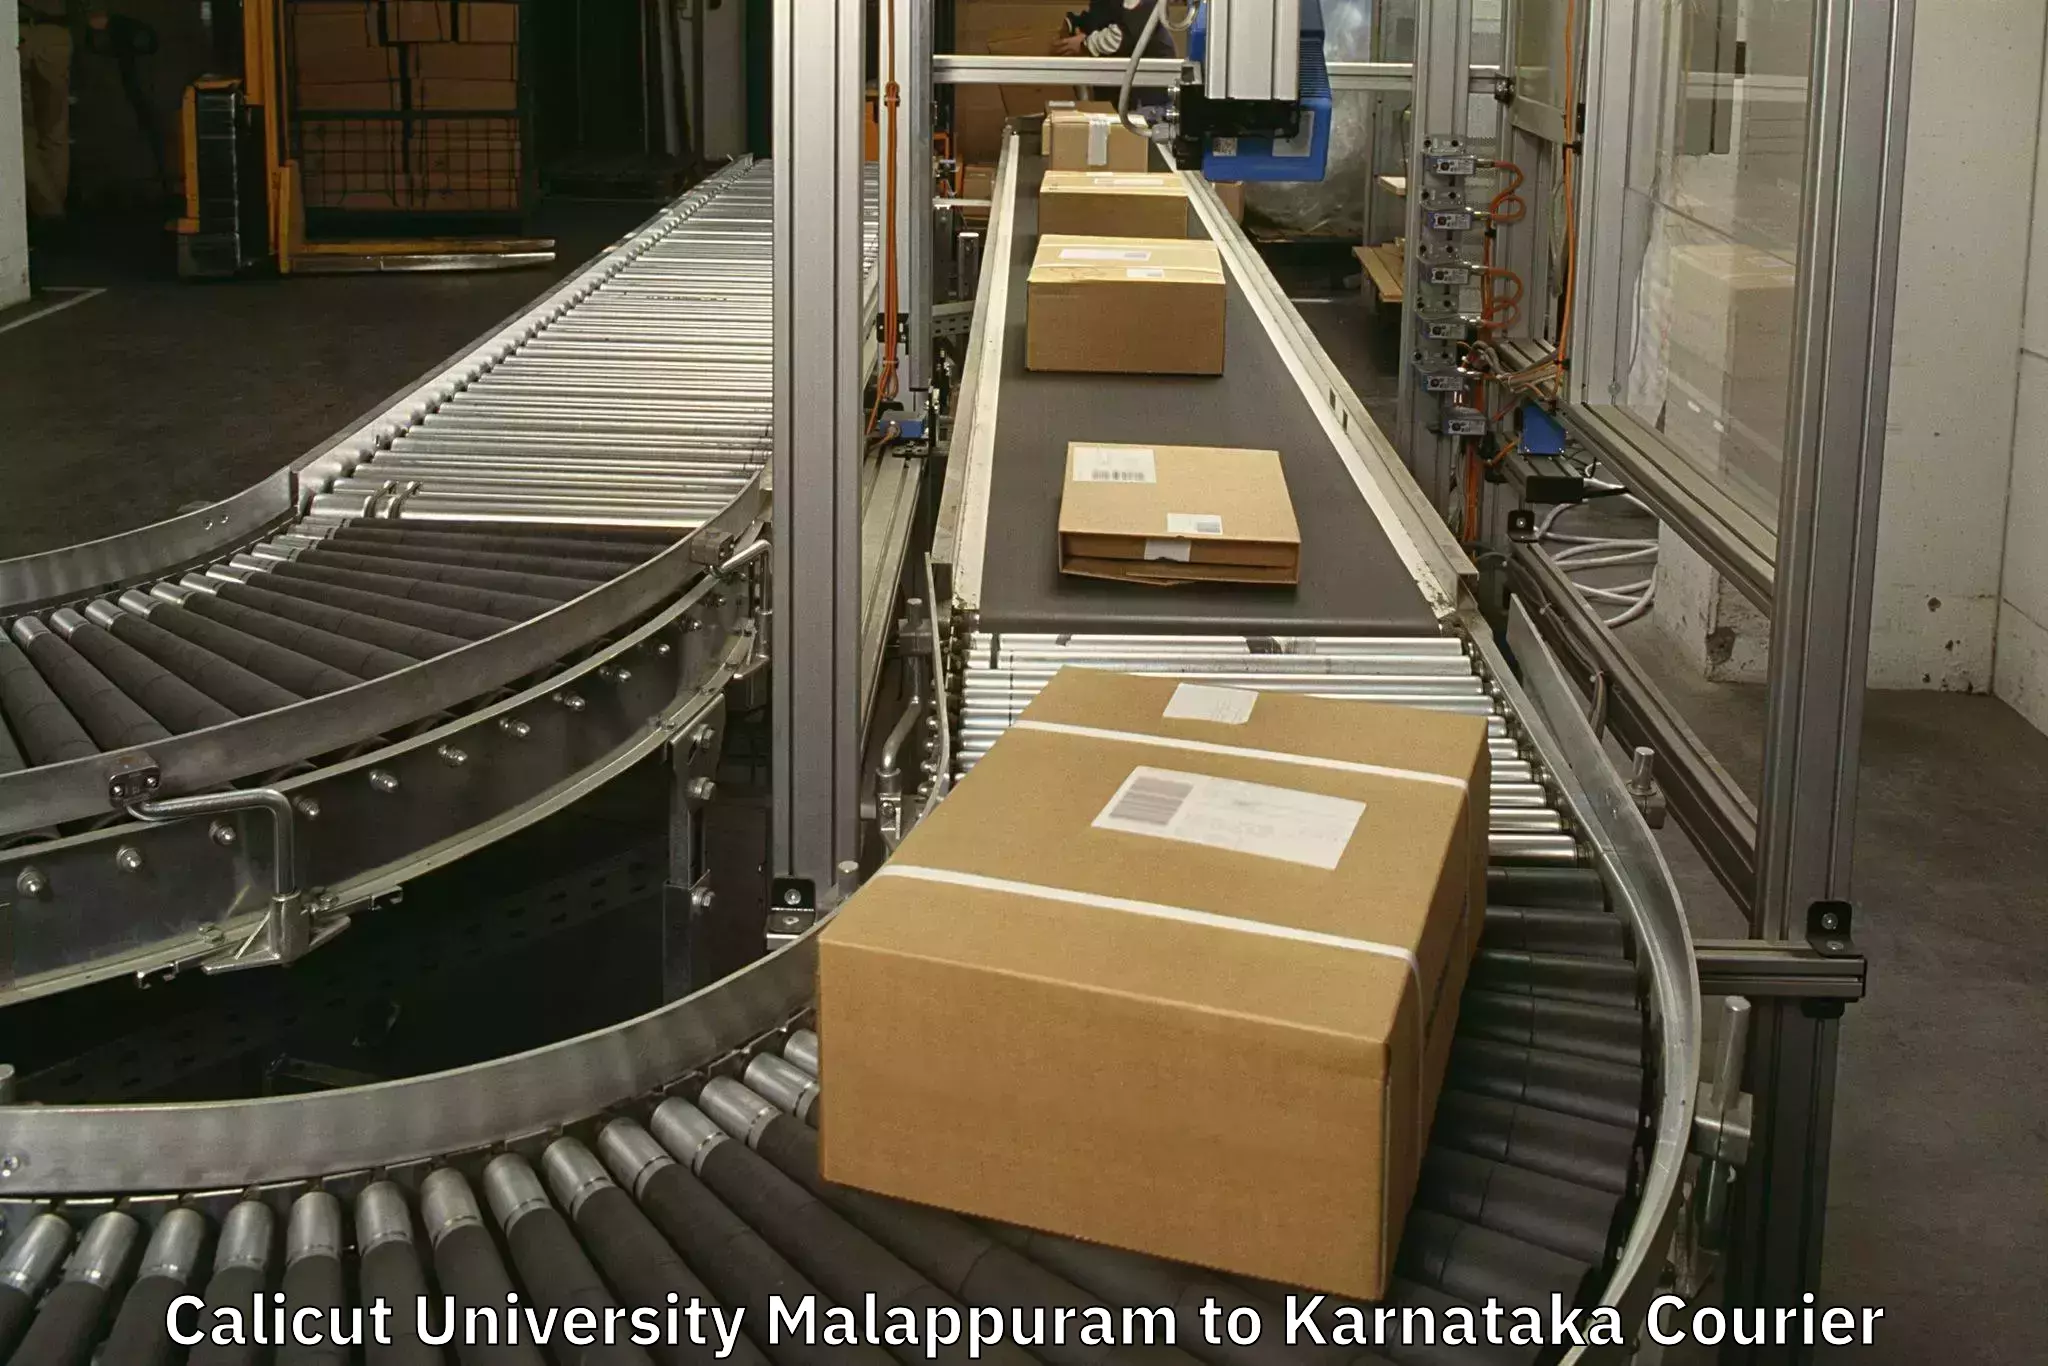 Luggage delivery network Calicut University Malappuram to Hospet